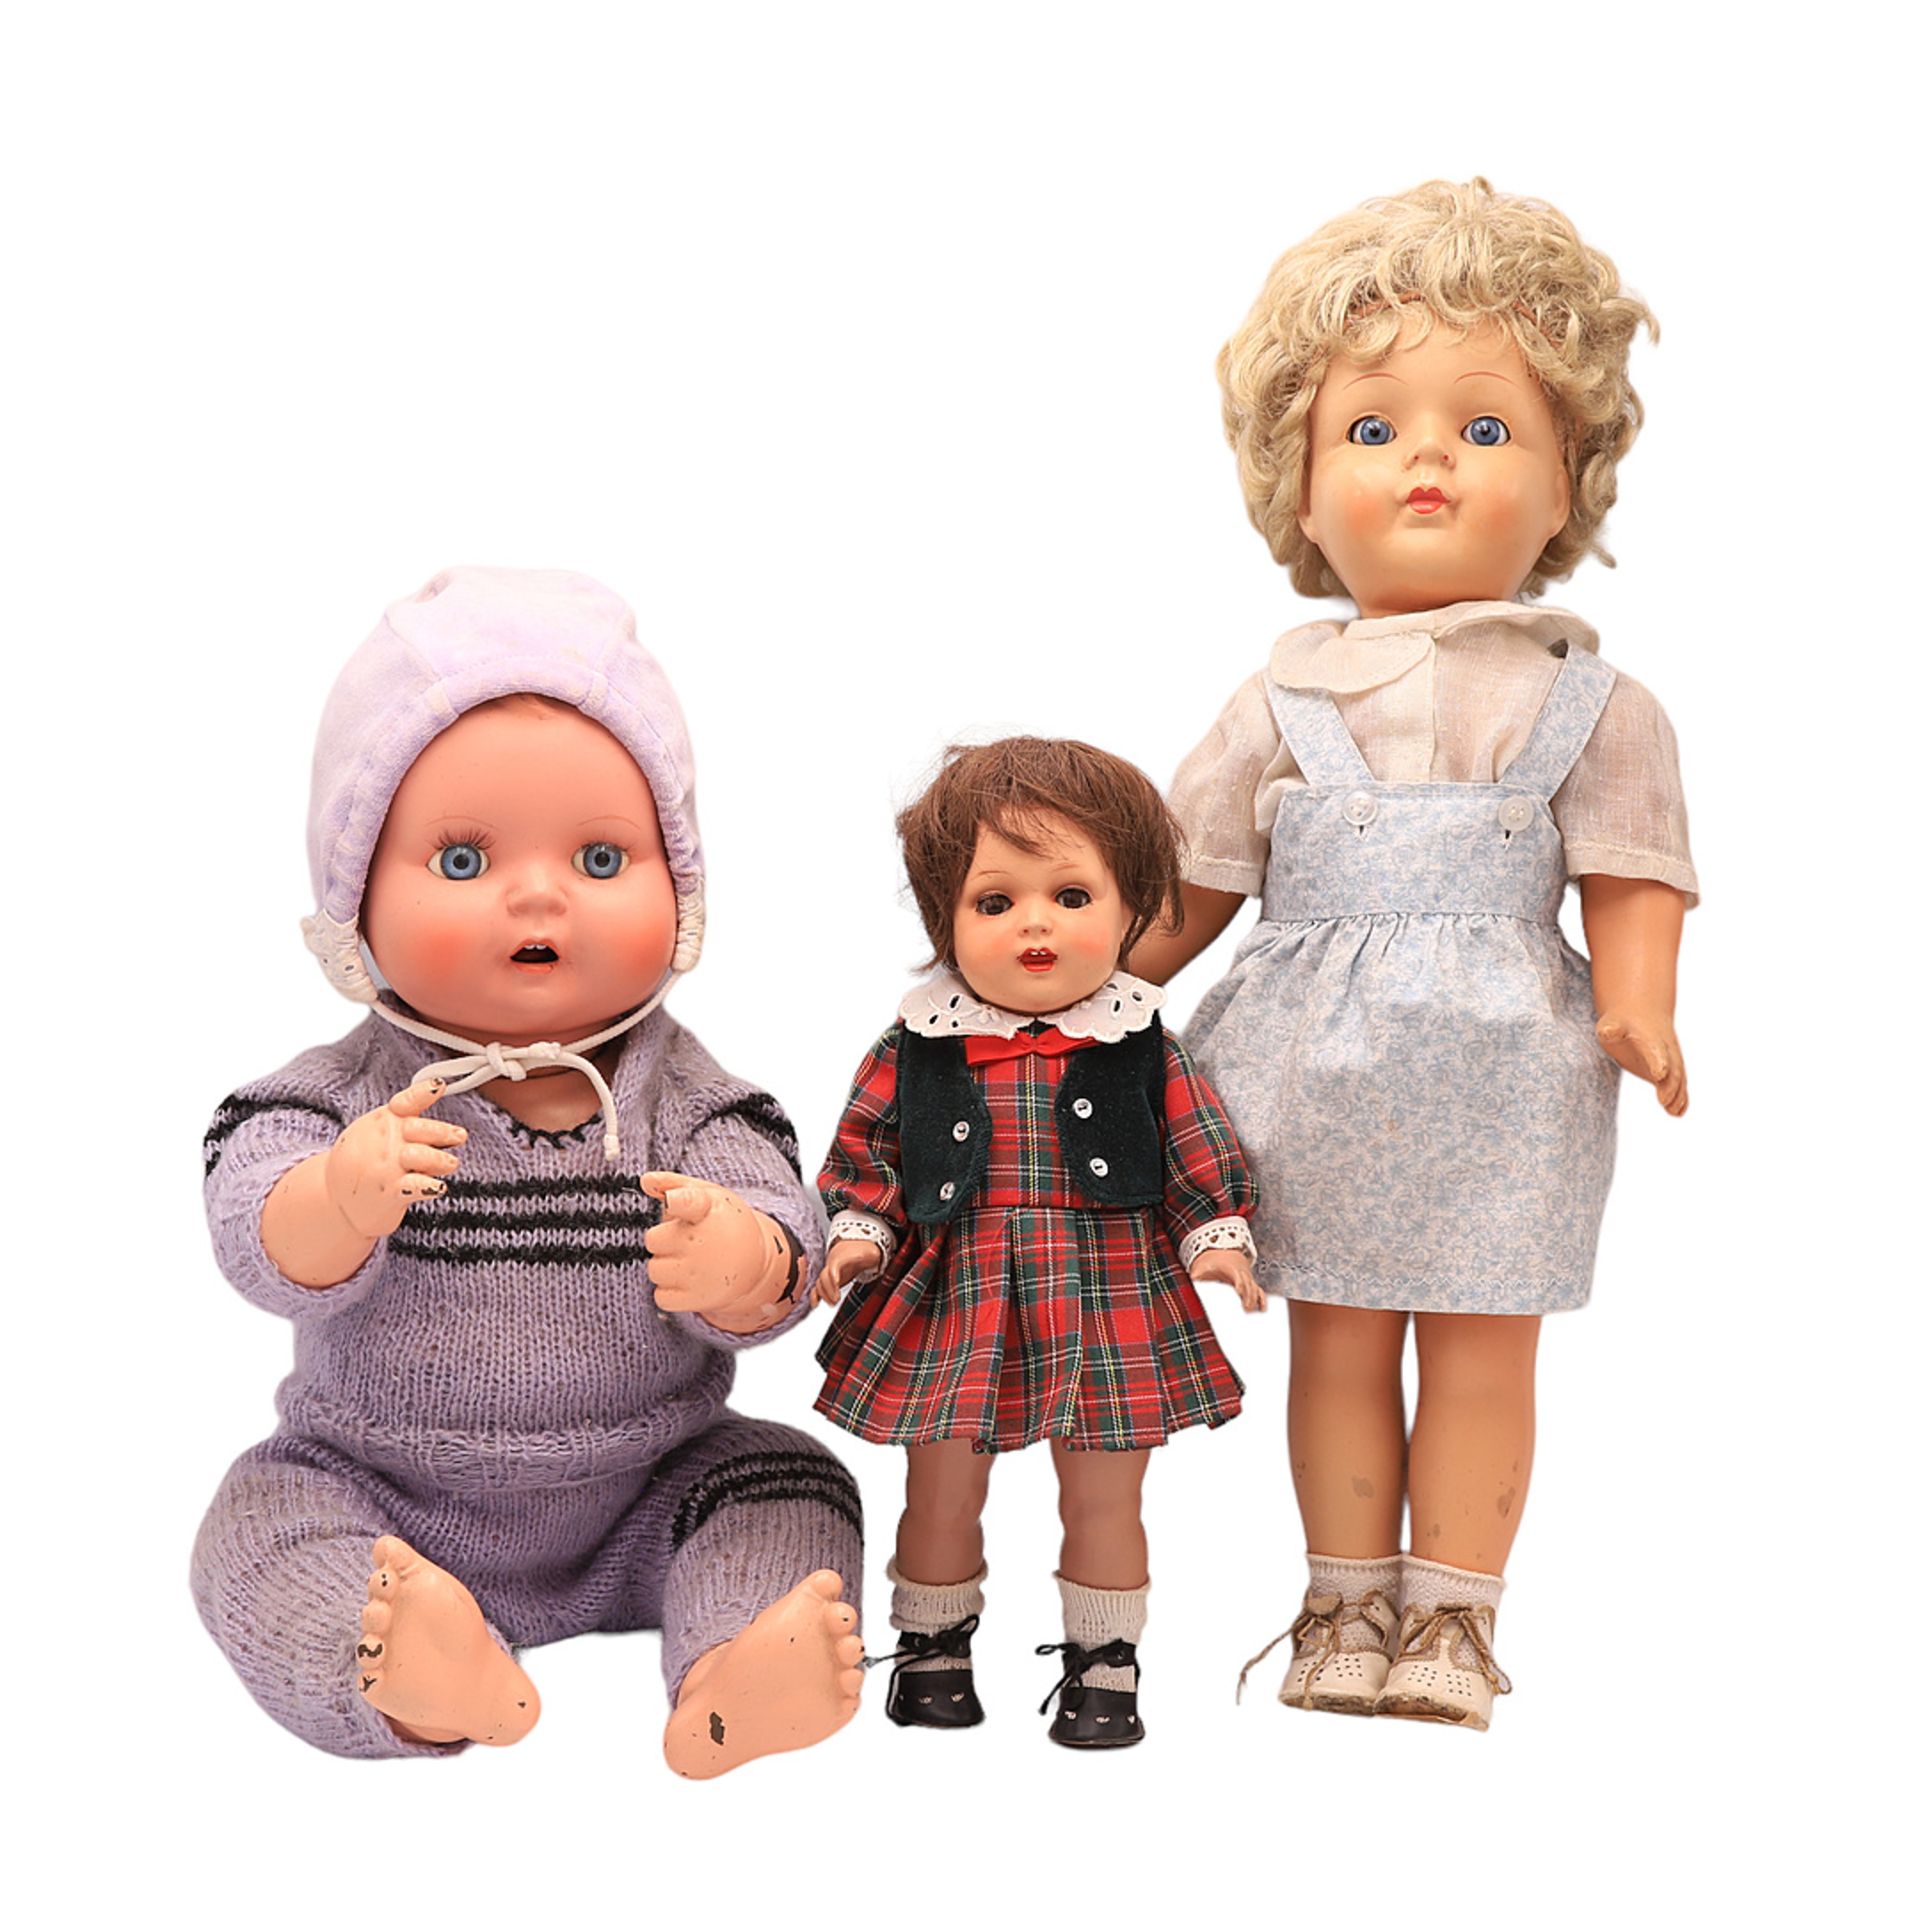 Three dolls in different sizes